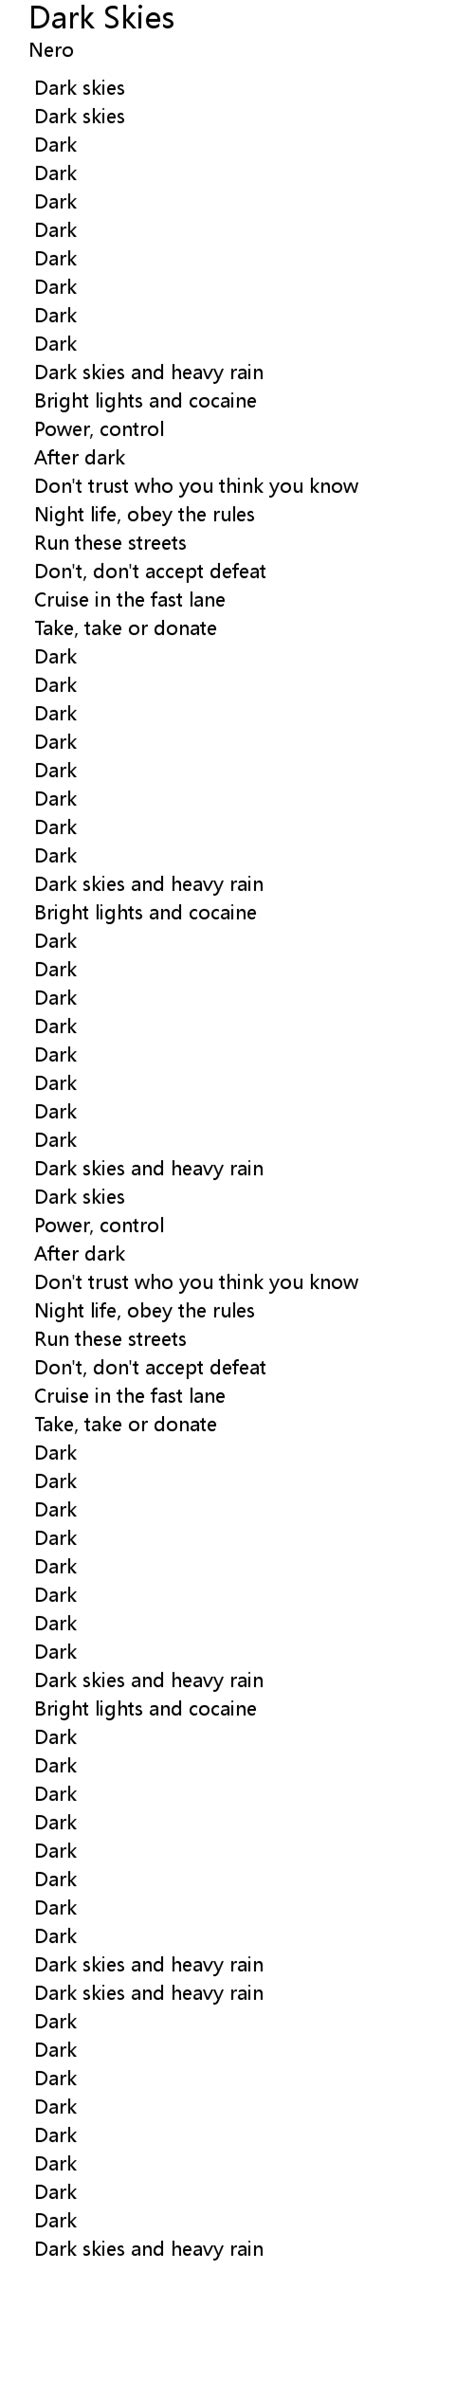 Dark Skies Lyrics Follow Lyrics